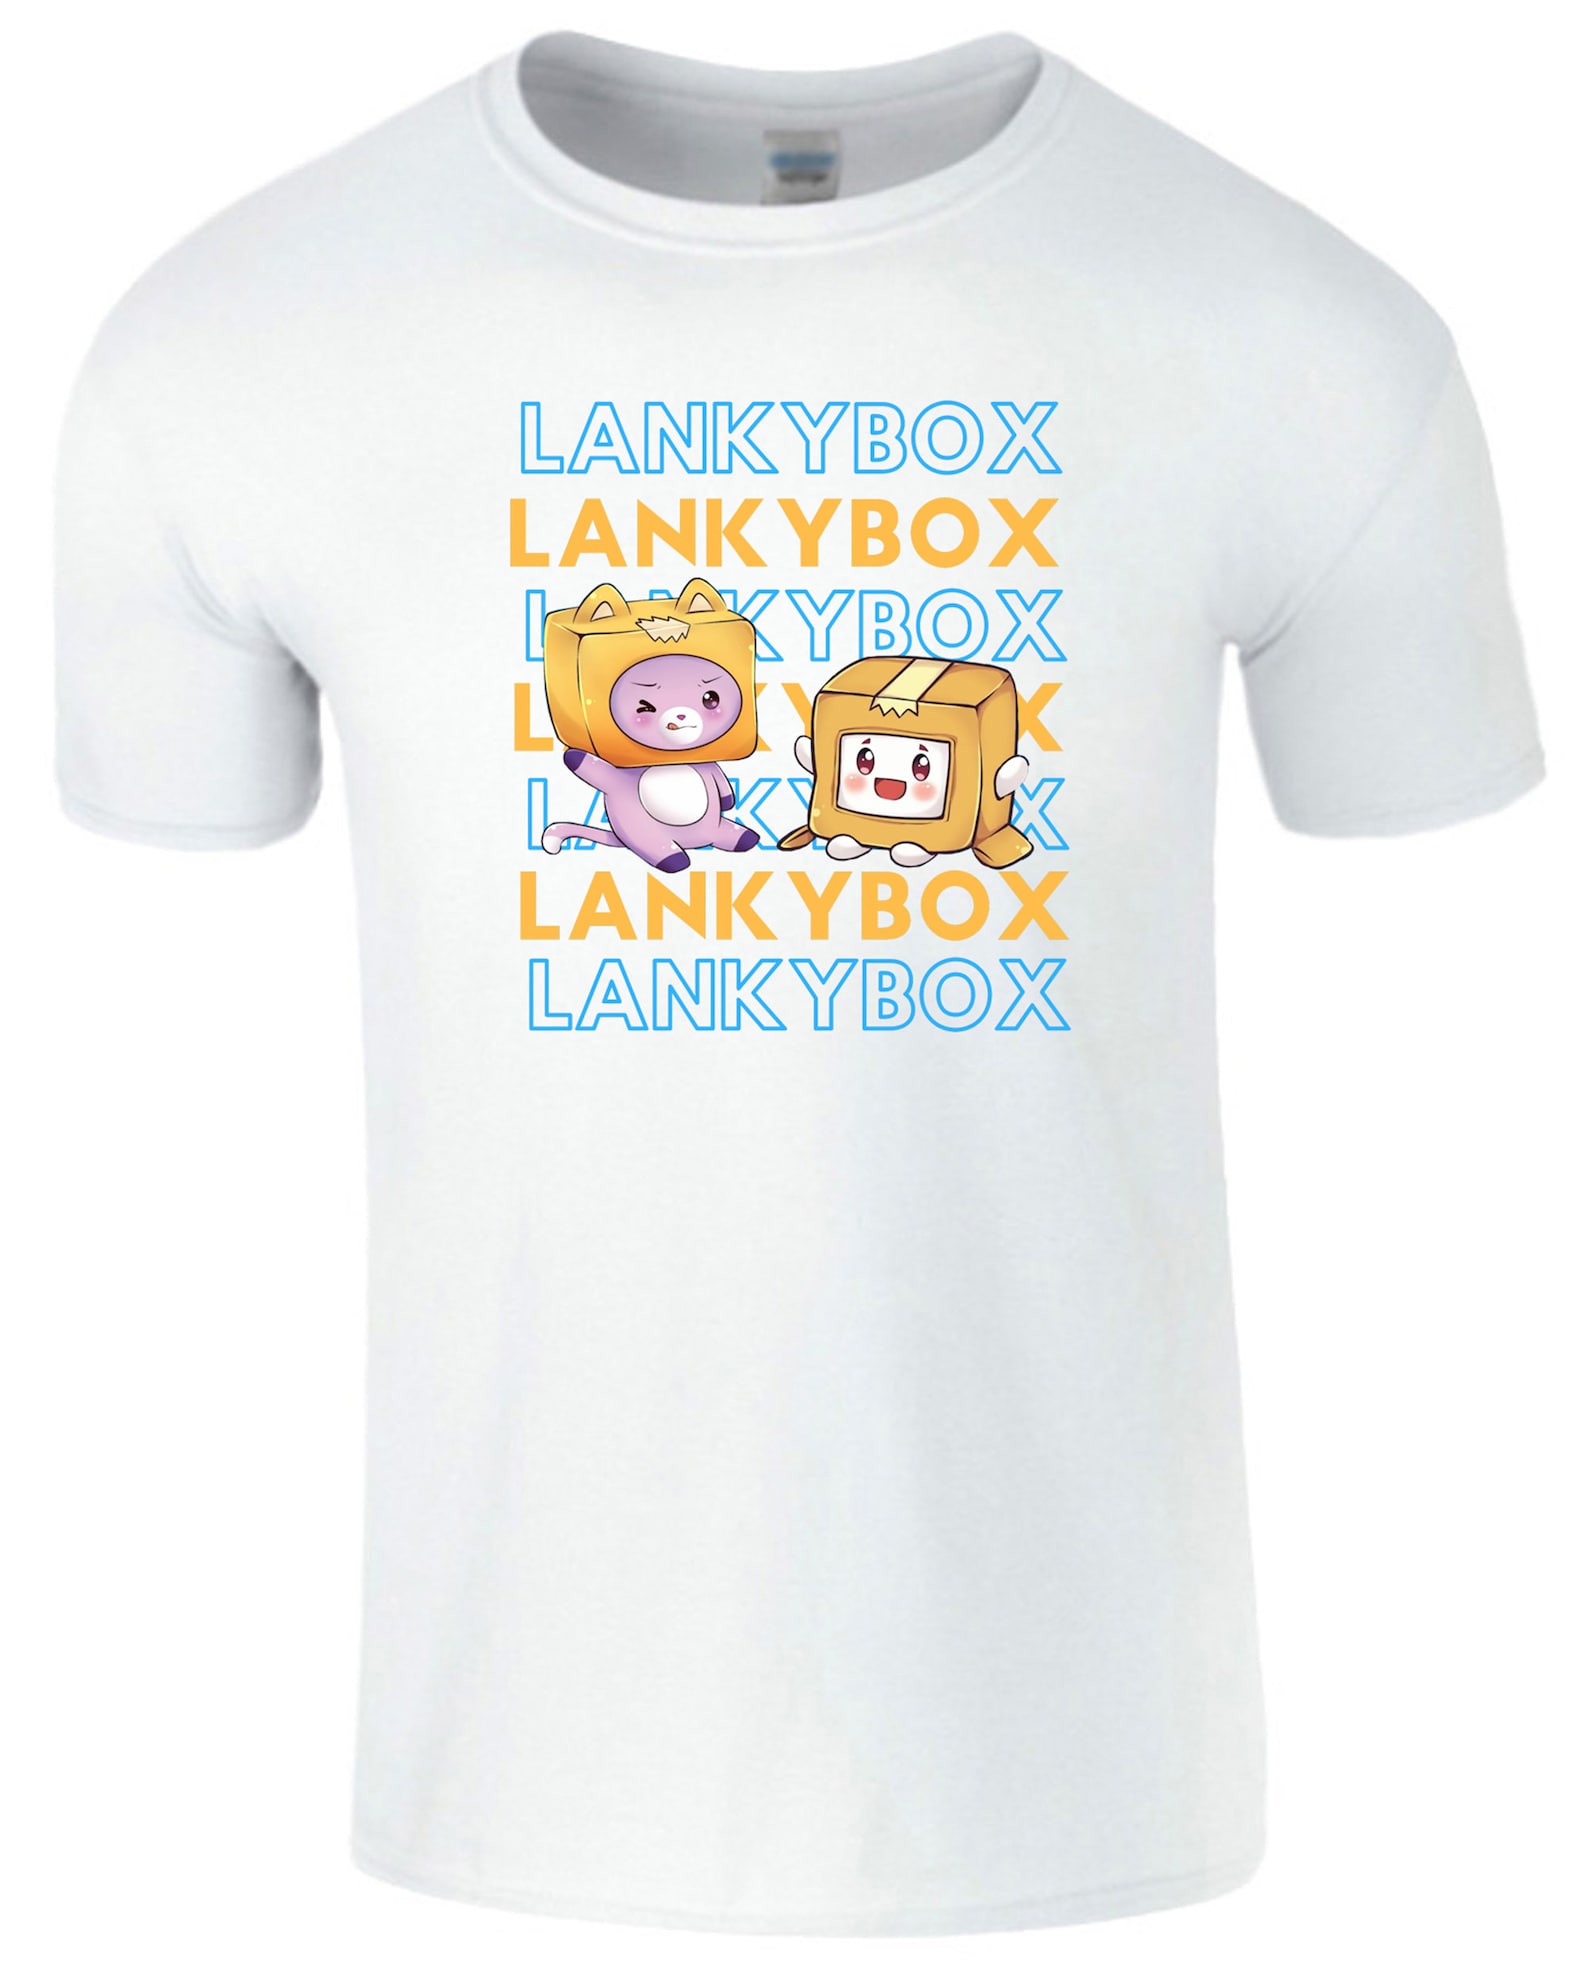 Lanky Box T Shirt Kids Boys Girls Present Tee Top Funny | Etsy